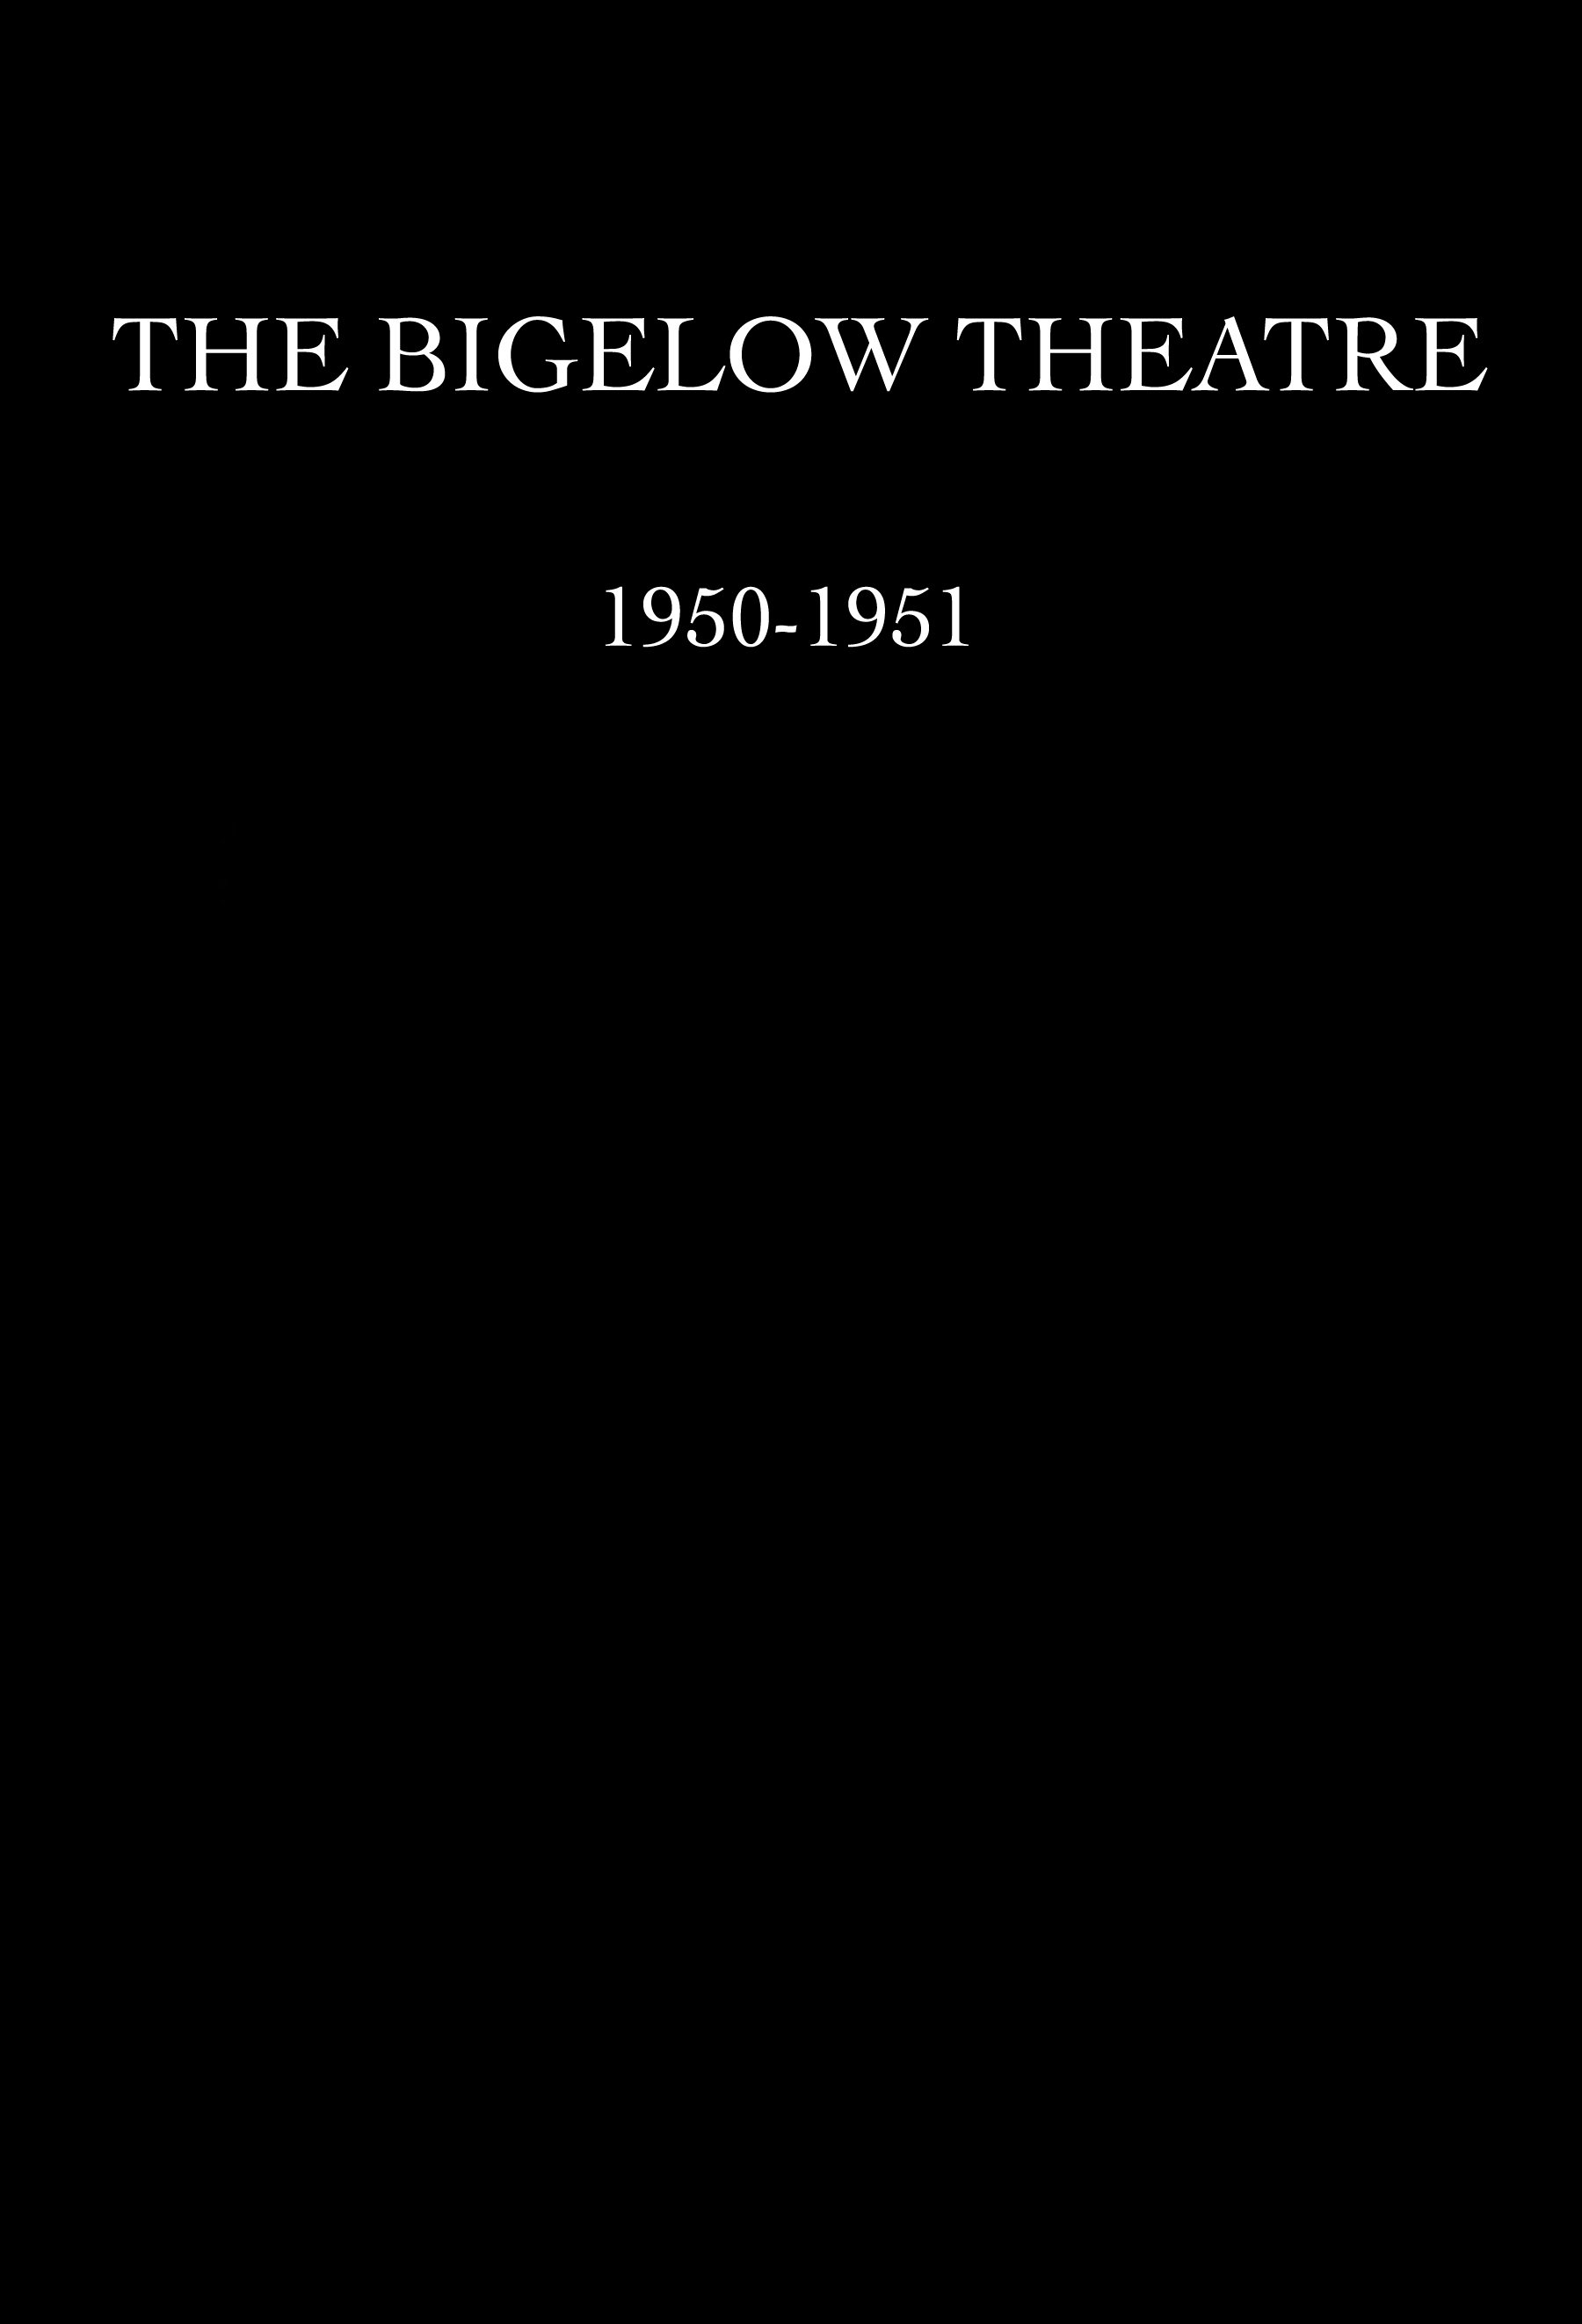 The Bigelow Theatre